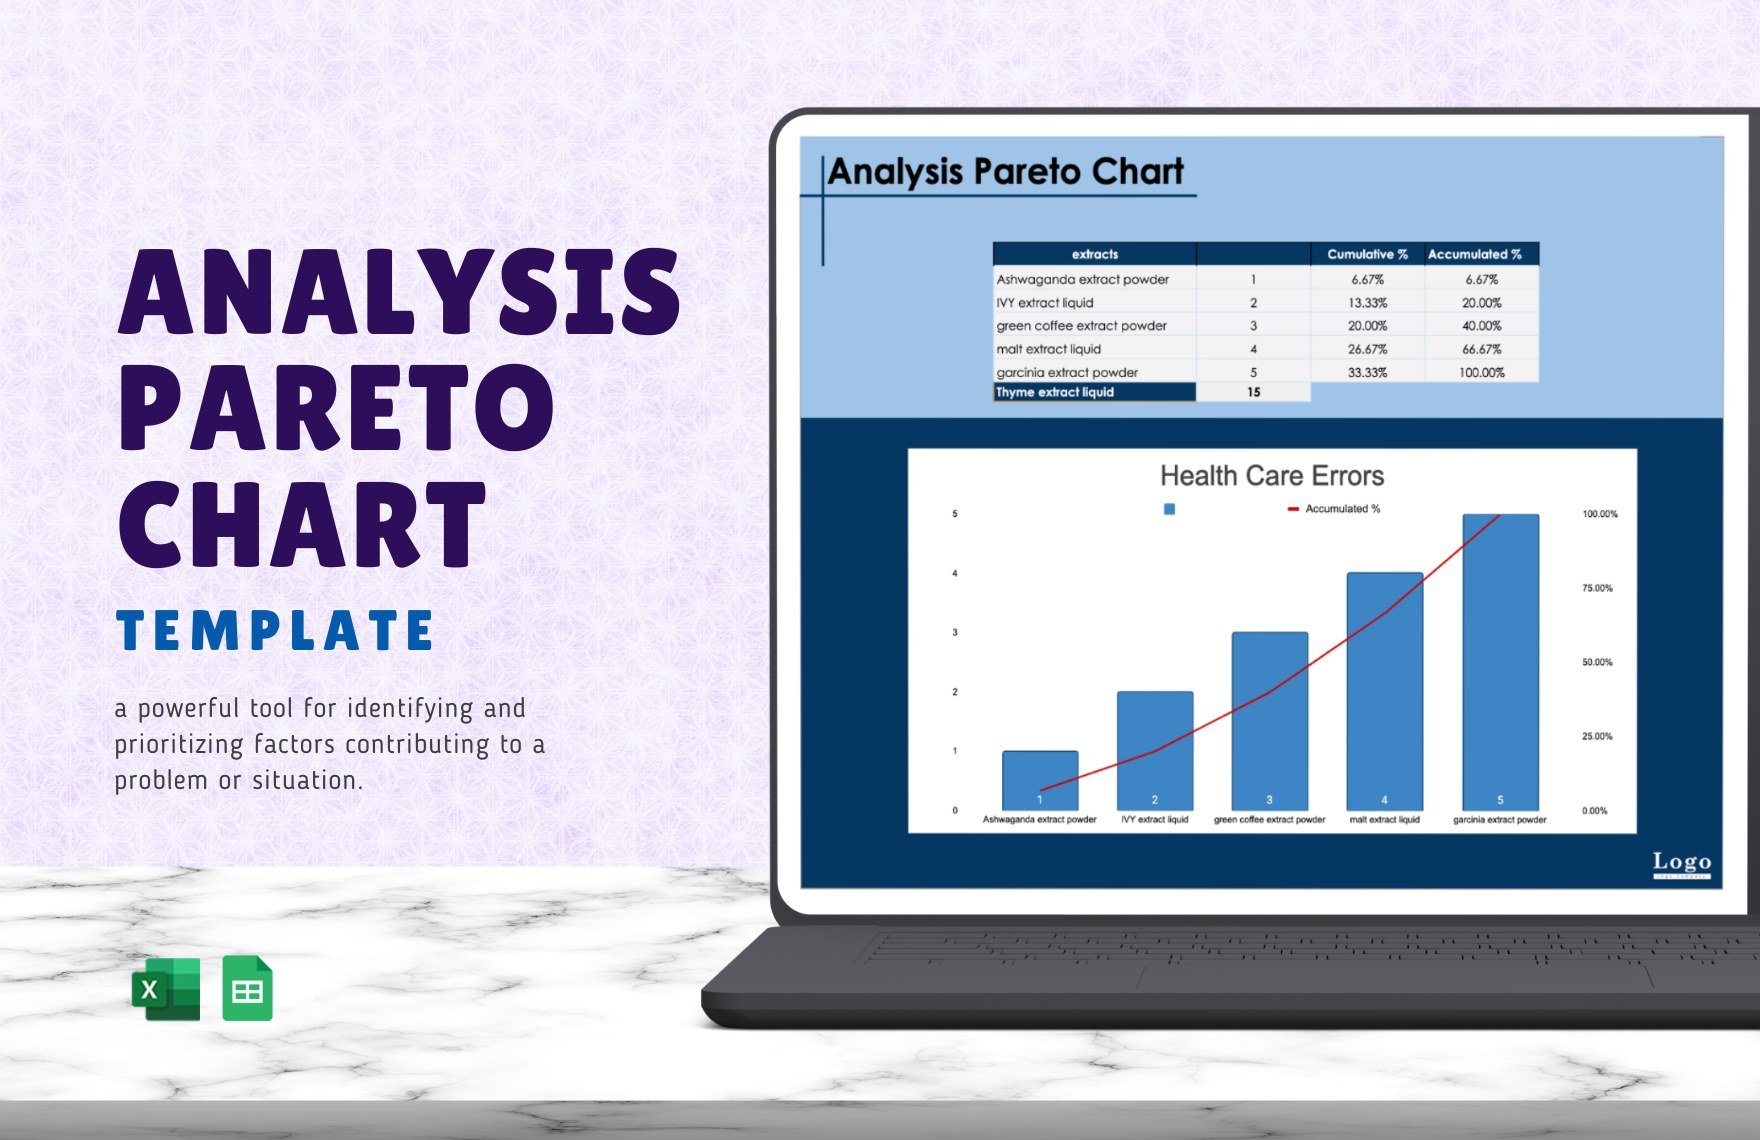 Analysis Pareto Chart Template